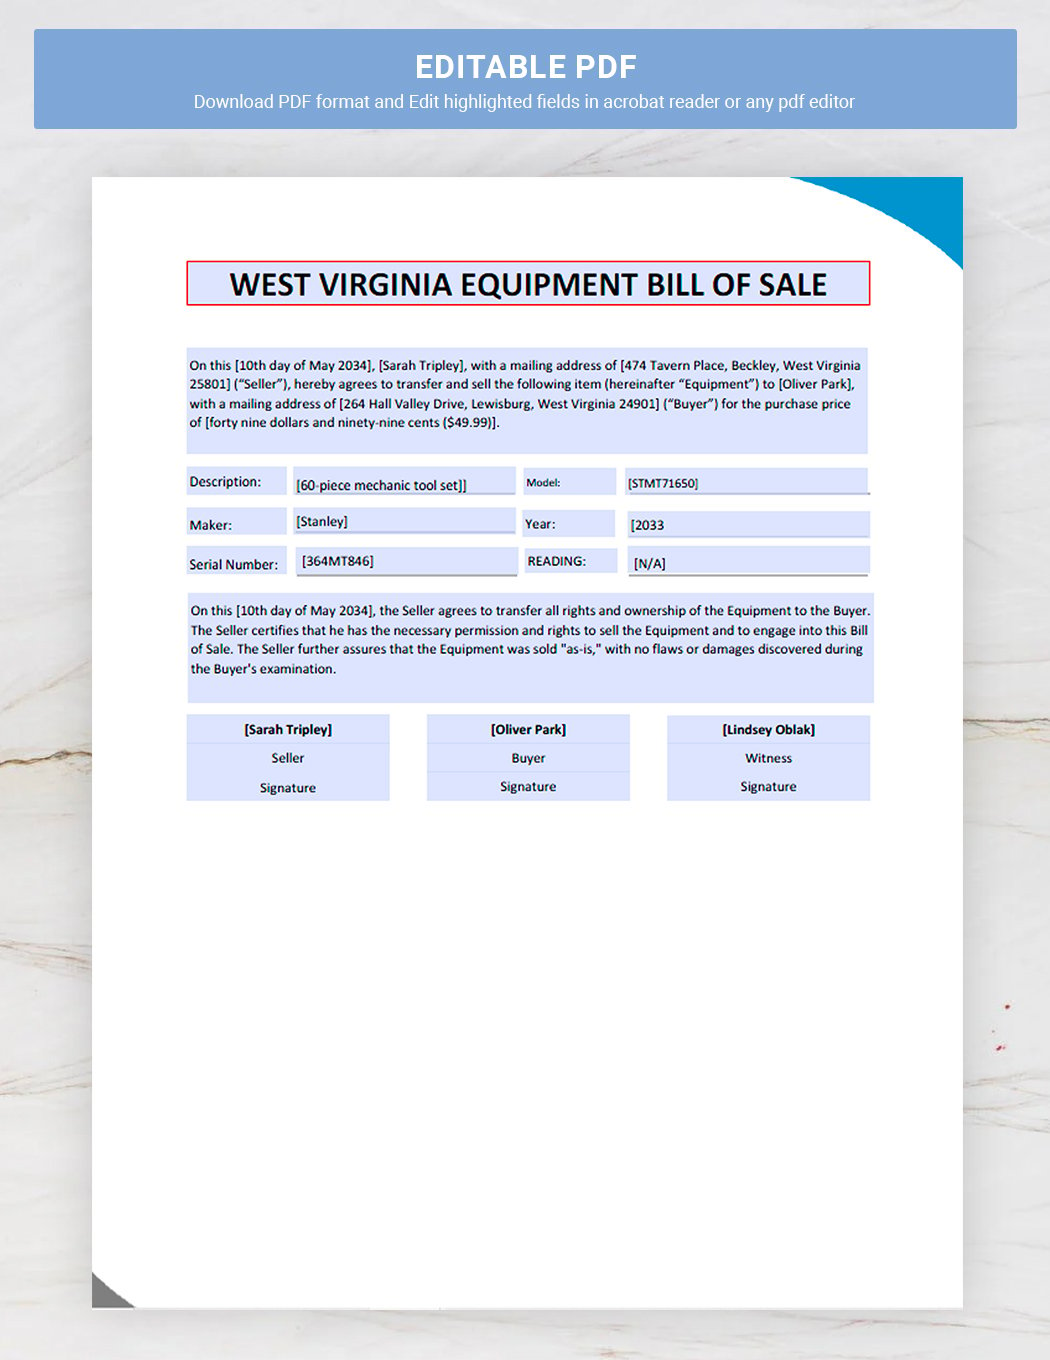 West Virginia Equipment Bill of Sale Template